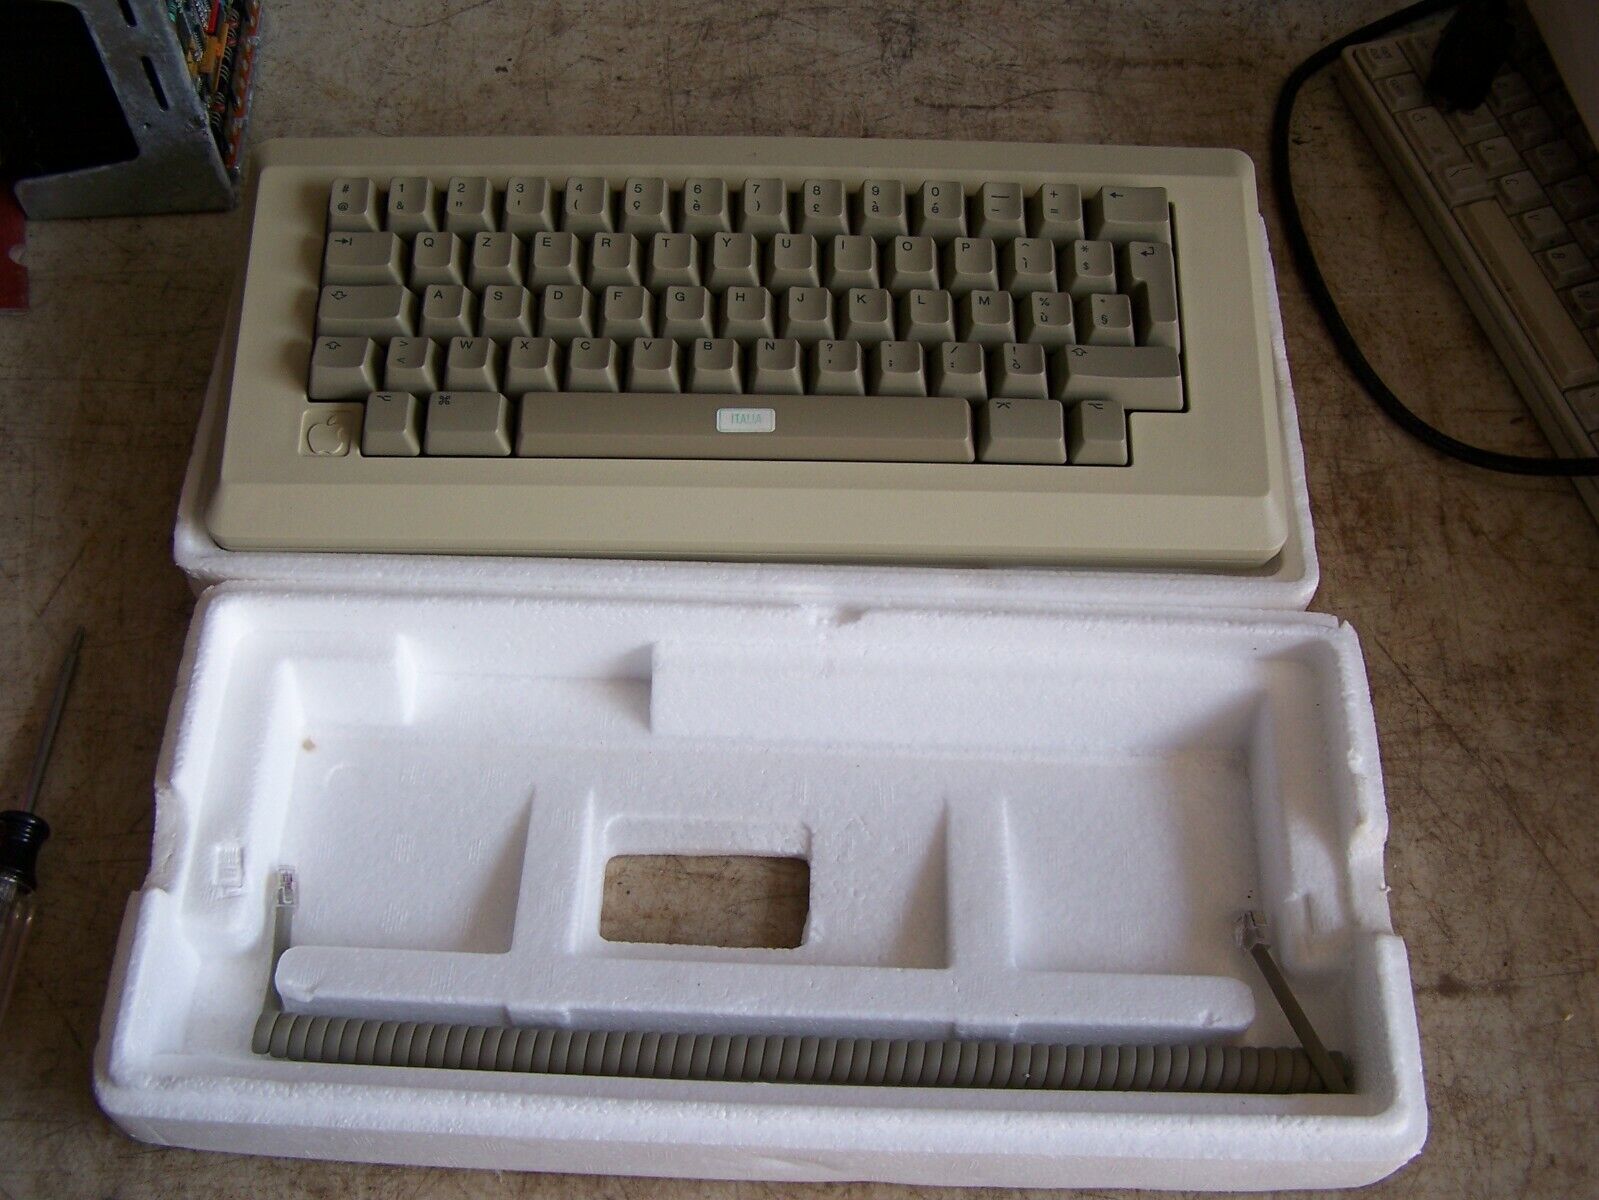  Macintosh 128K/512K Italian Keyboard M0110 - Estate Sale